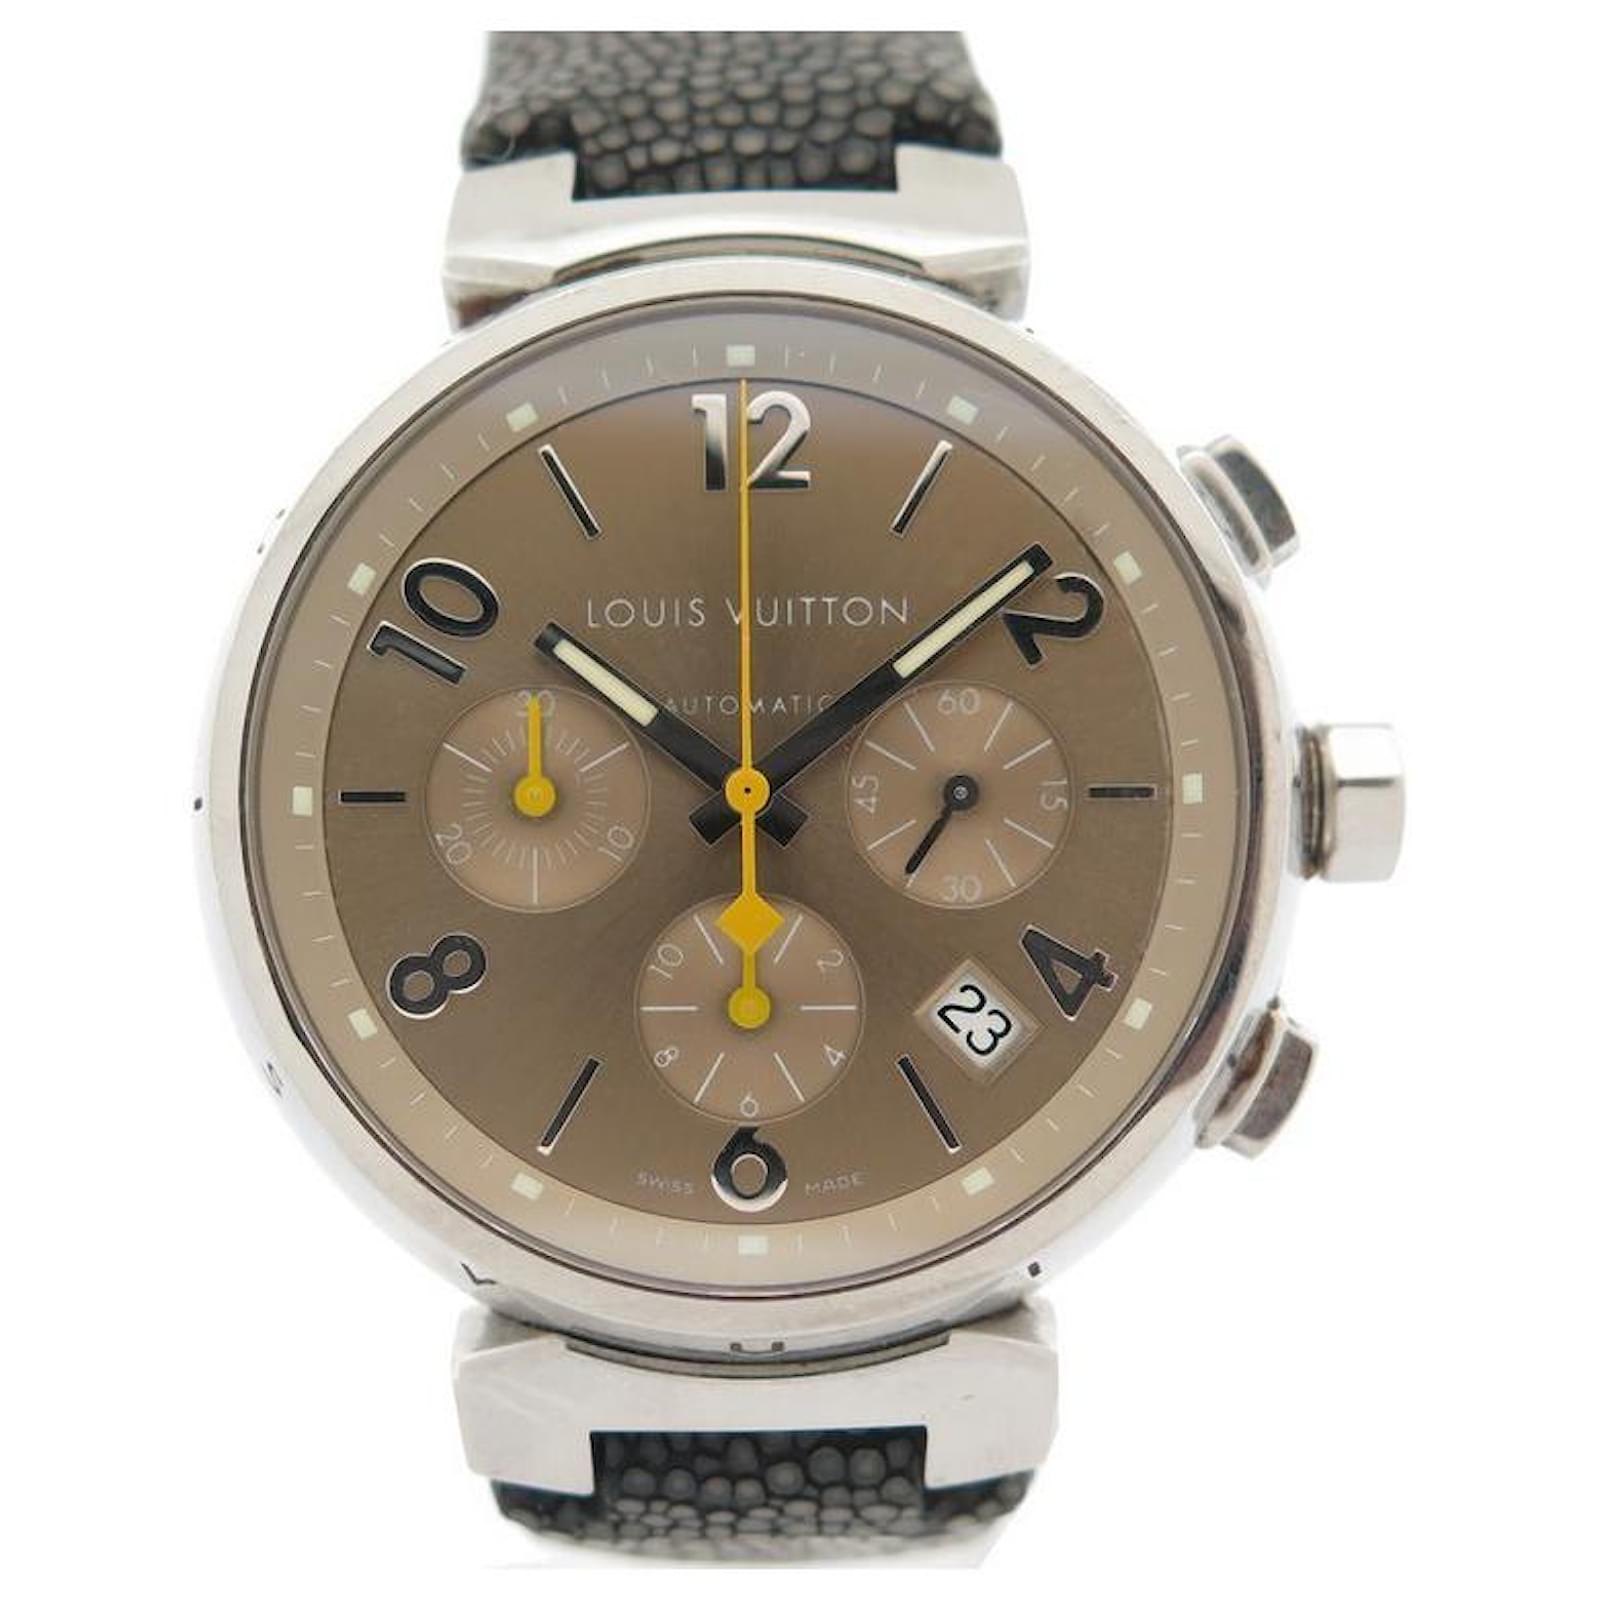 vuitton chronometer watch